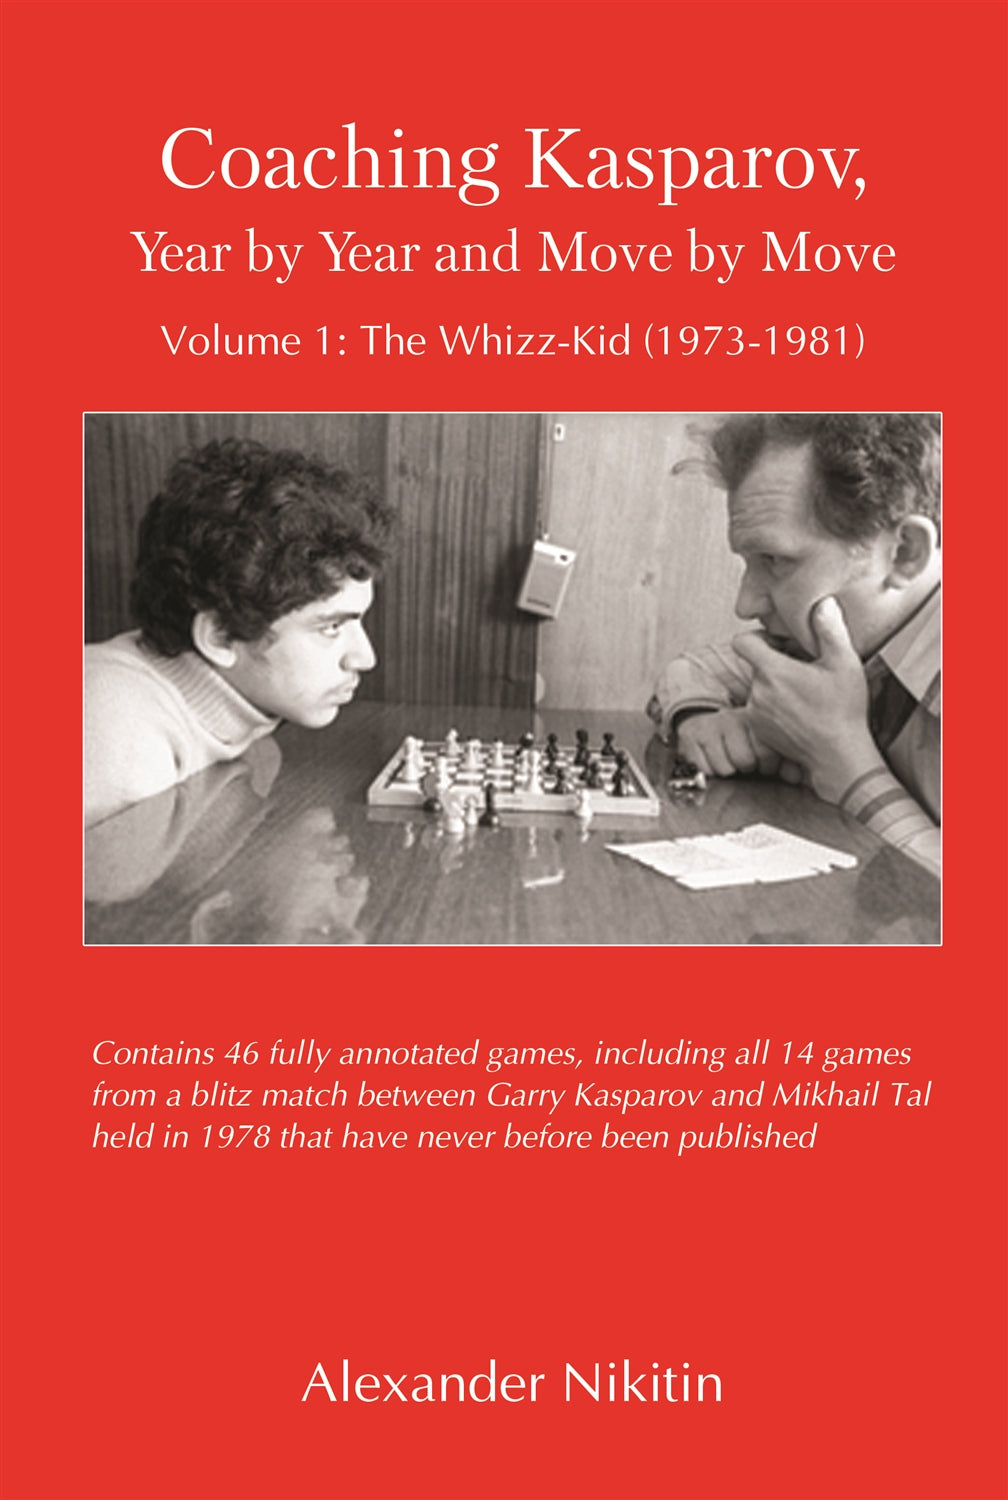 Garry Kasparov's Greatest Chess Games volume 2 by Stohl, Igor: new